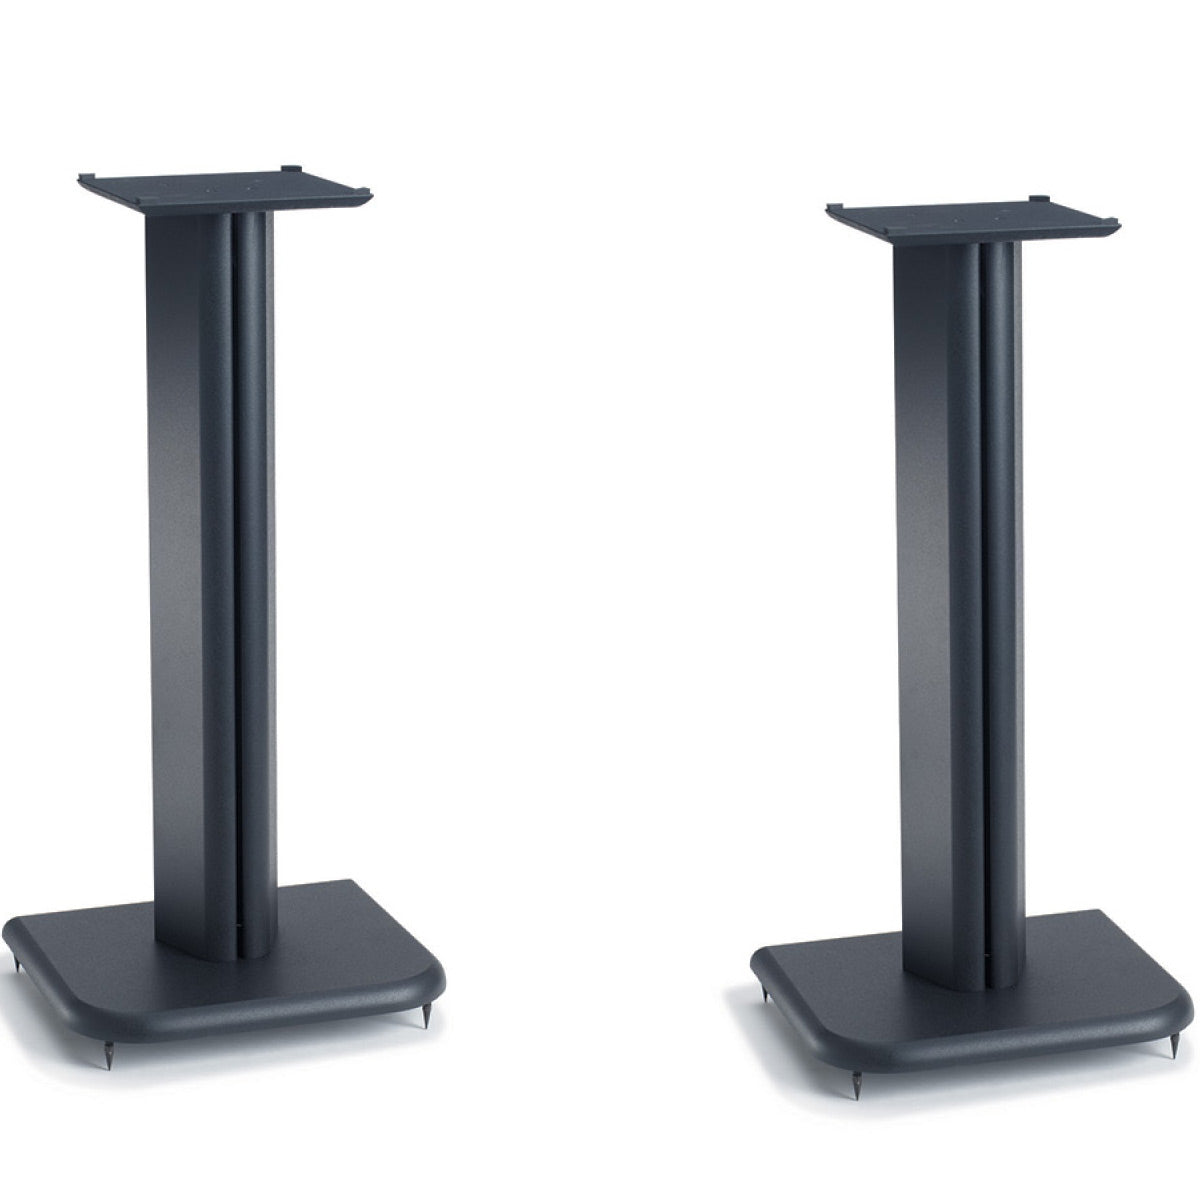 Sanus BF24 24" Fixed-Height Basic Foundations Speaker Stands - Pair (Black)